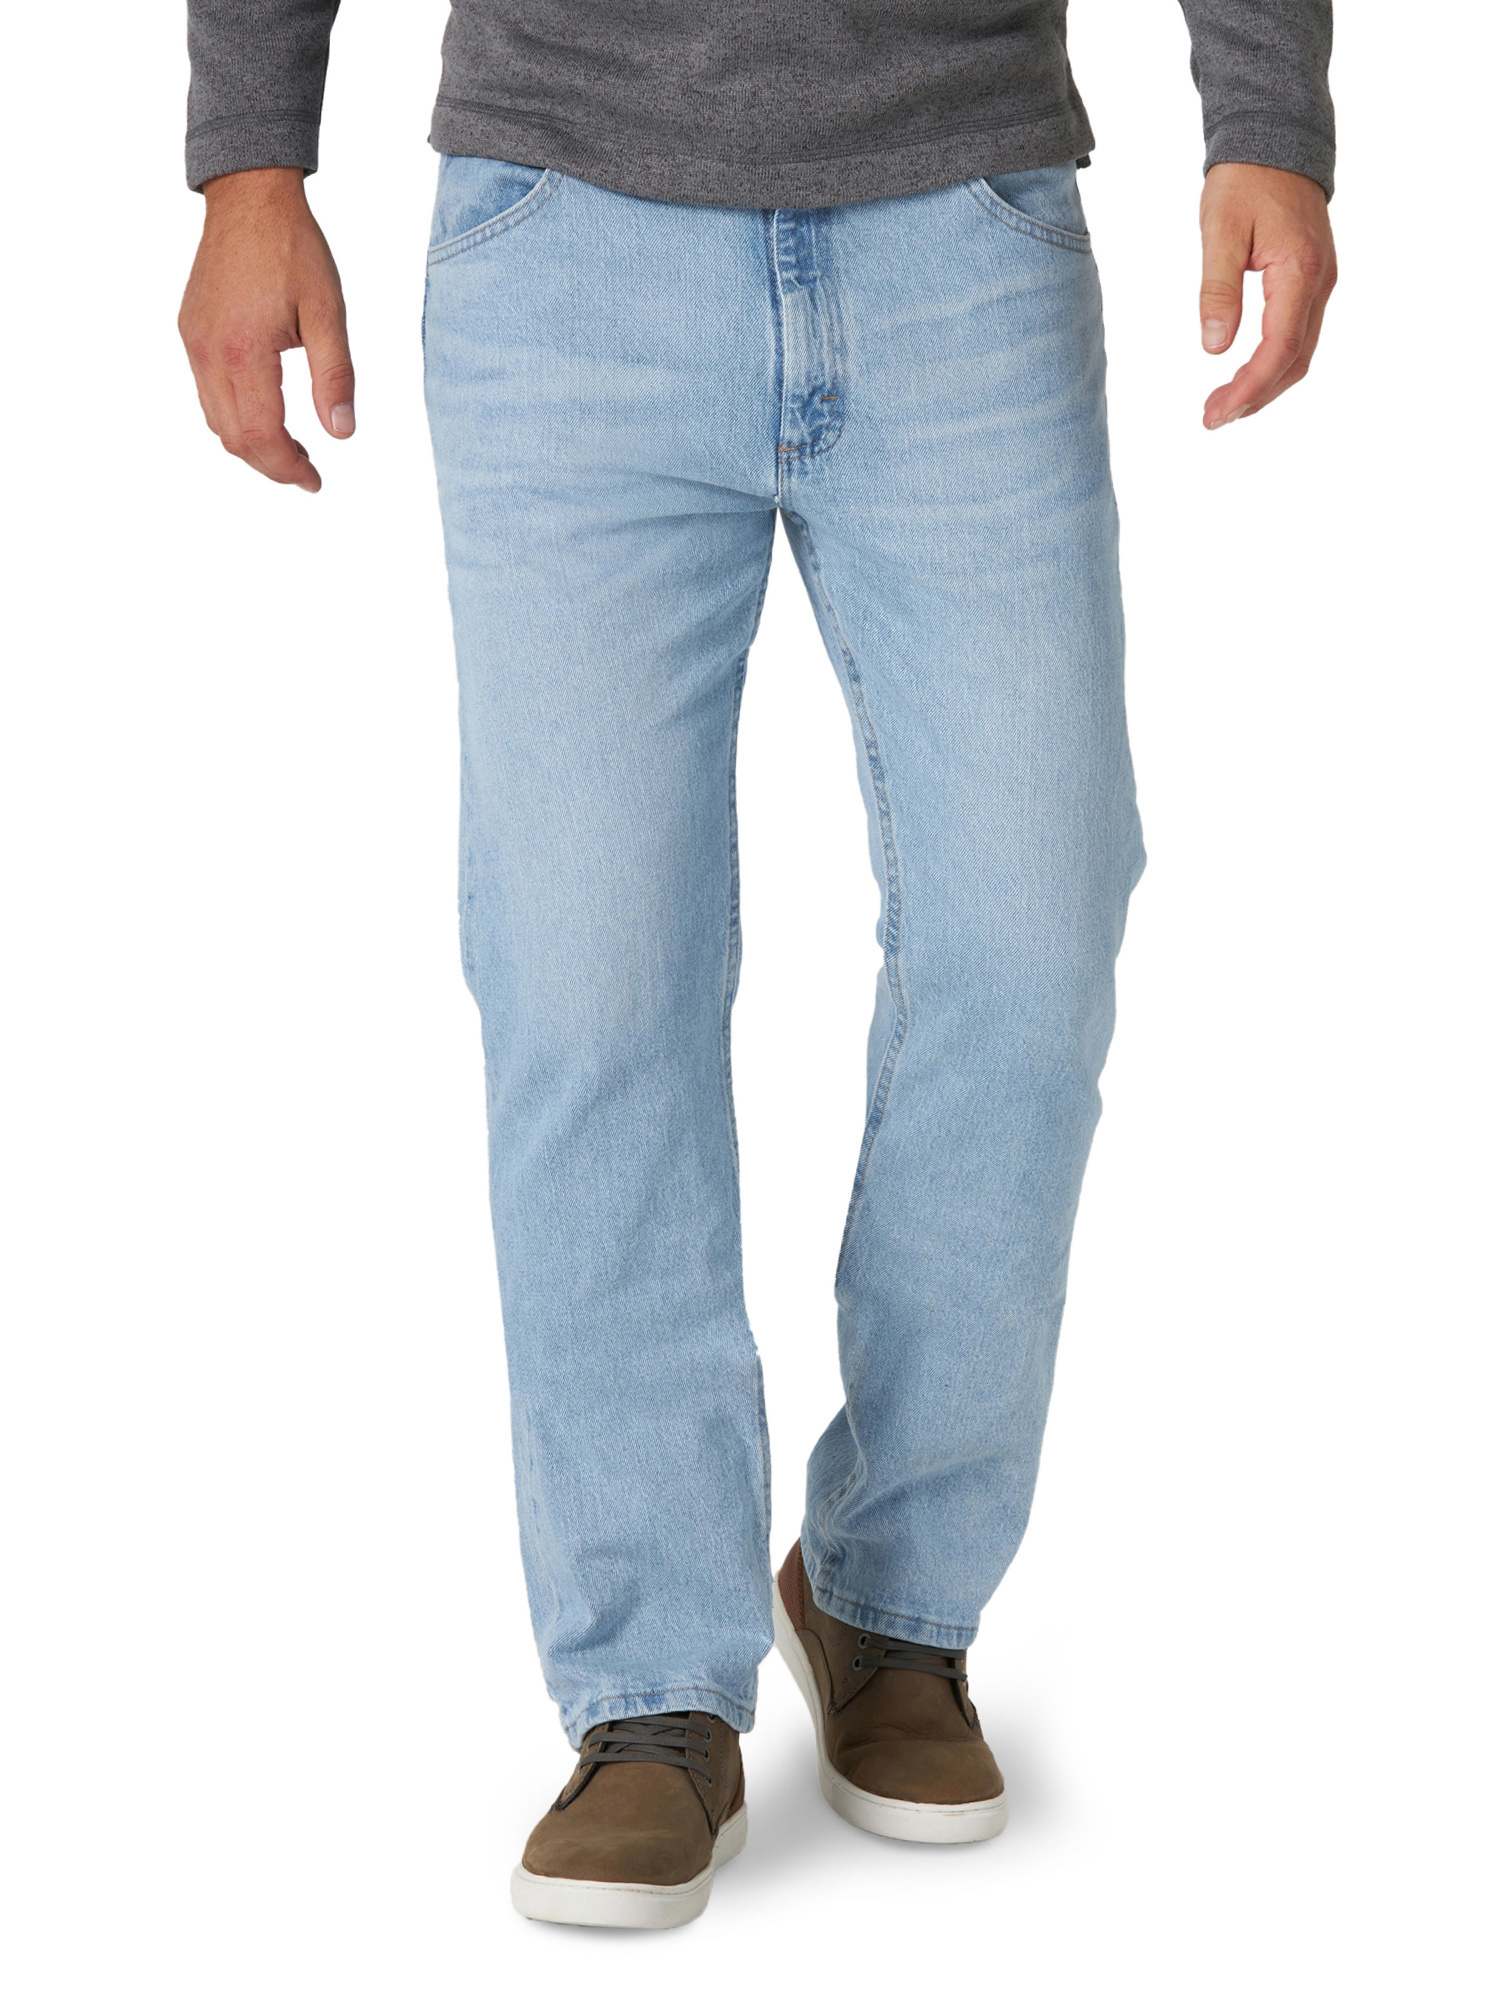 Wrangler Men's and Big Men's Regular Fit Jeans with Flex - image 1 of 10